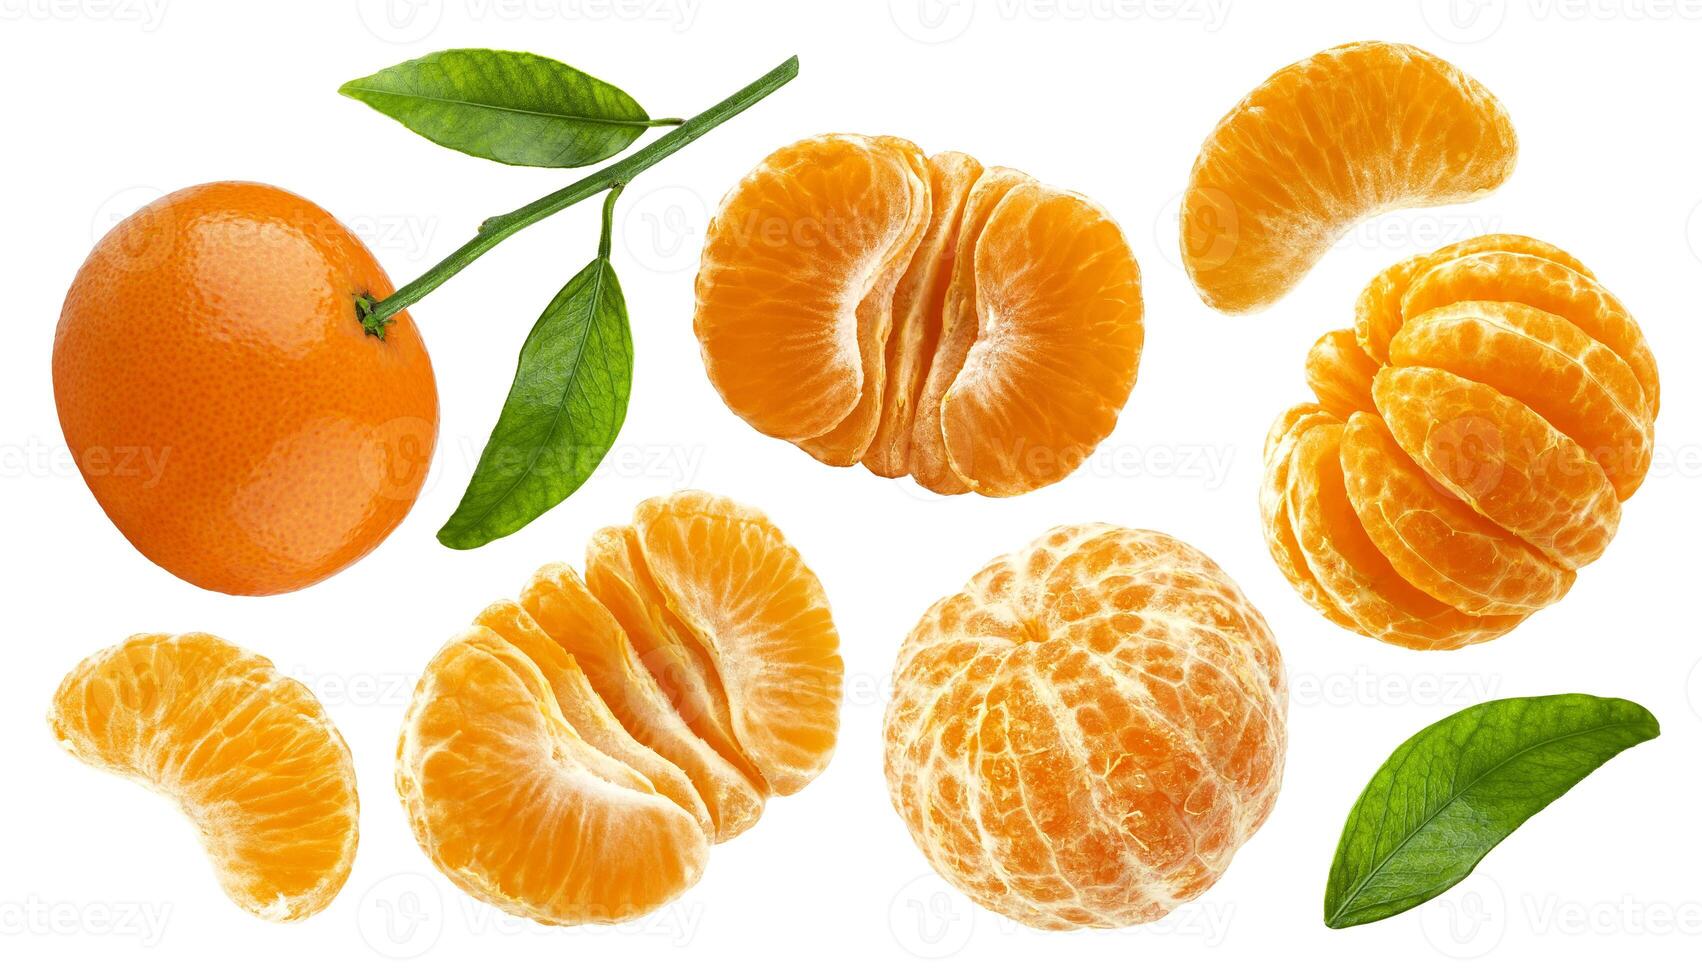 mandarim ou tangerina isolado no fundo branco foto